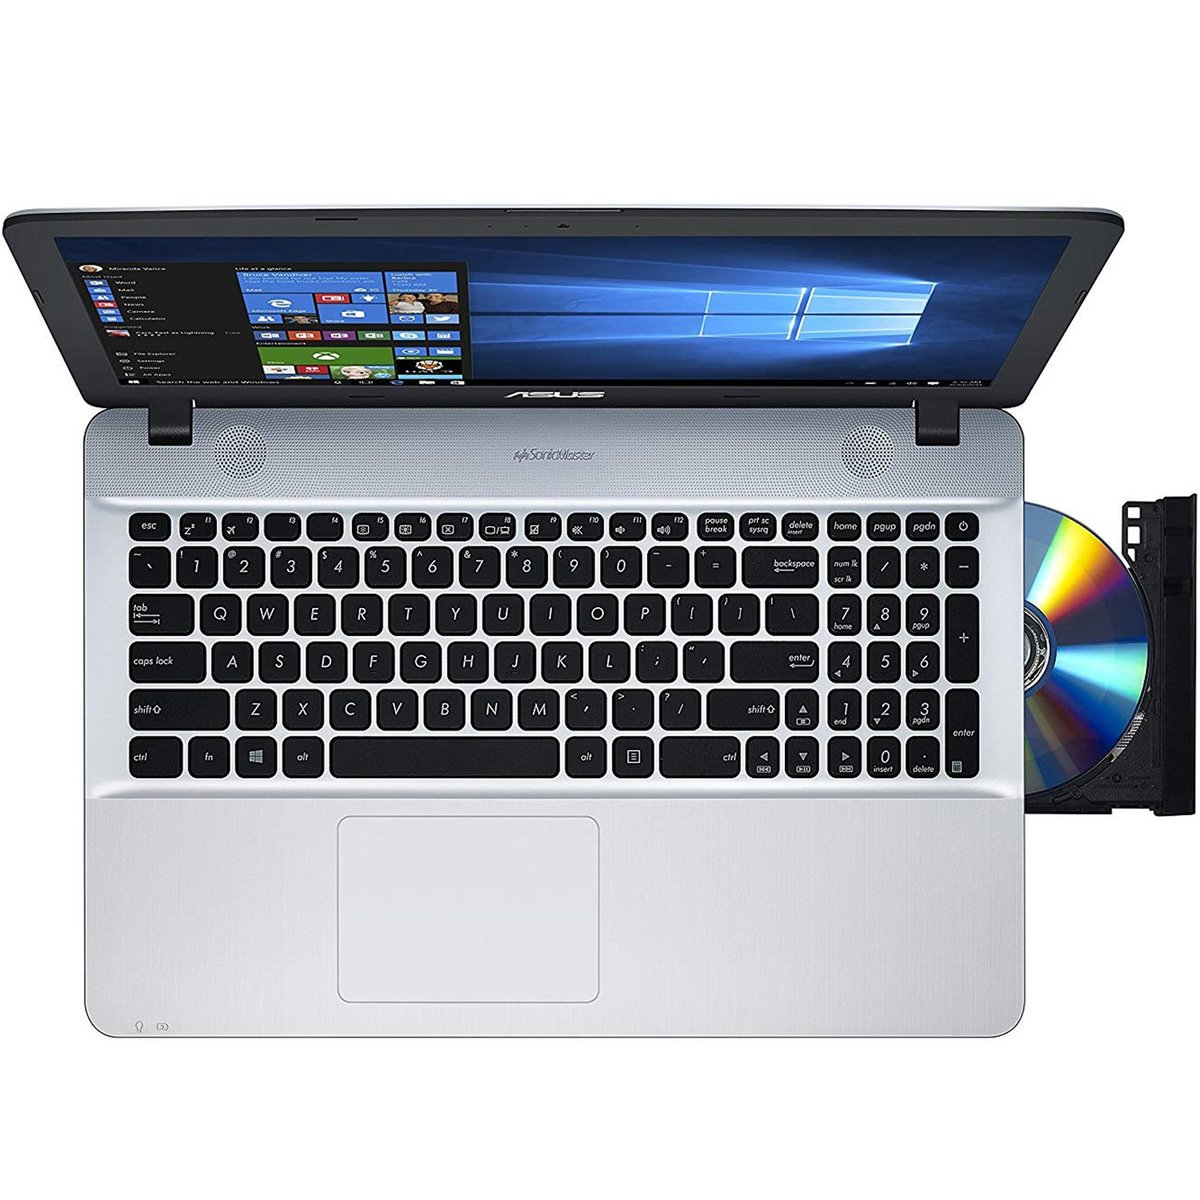 Asus VivoBook X540UA-DM685T Core i3 Silver